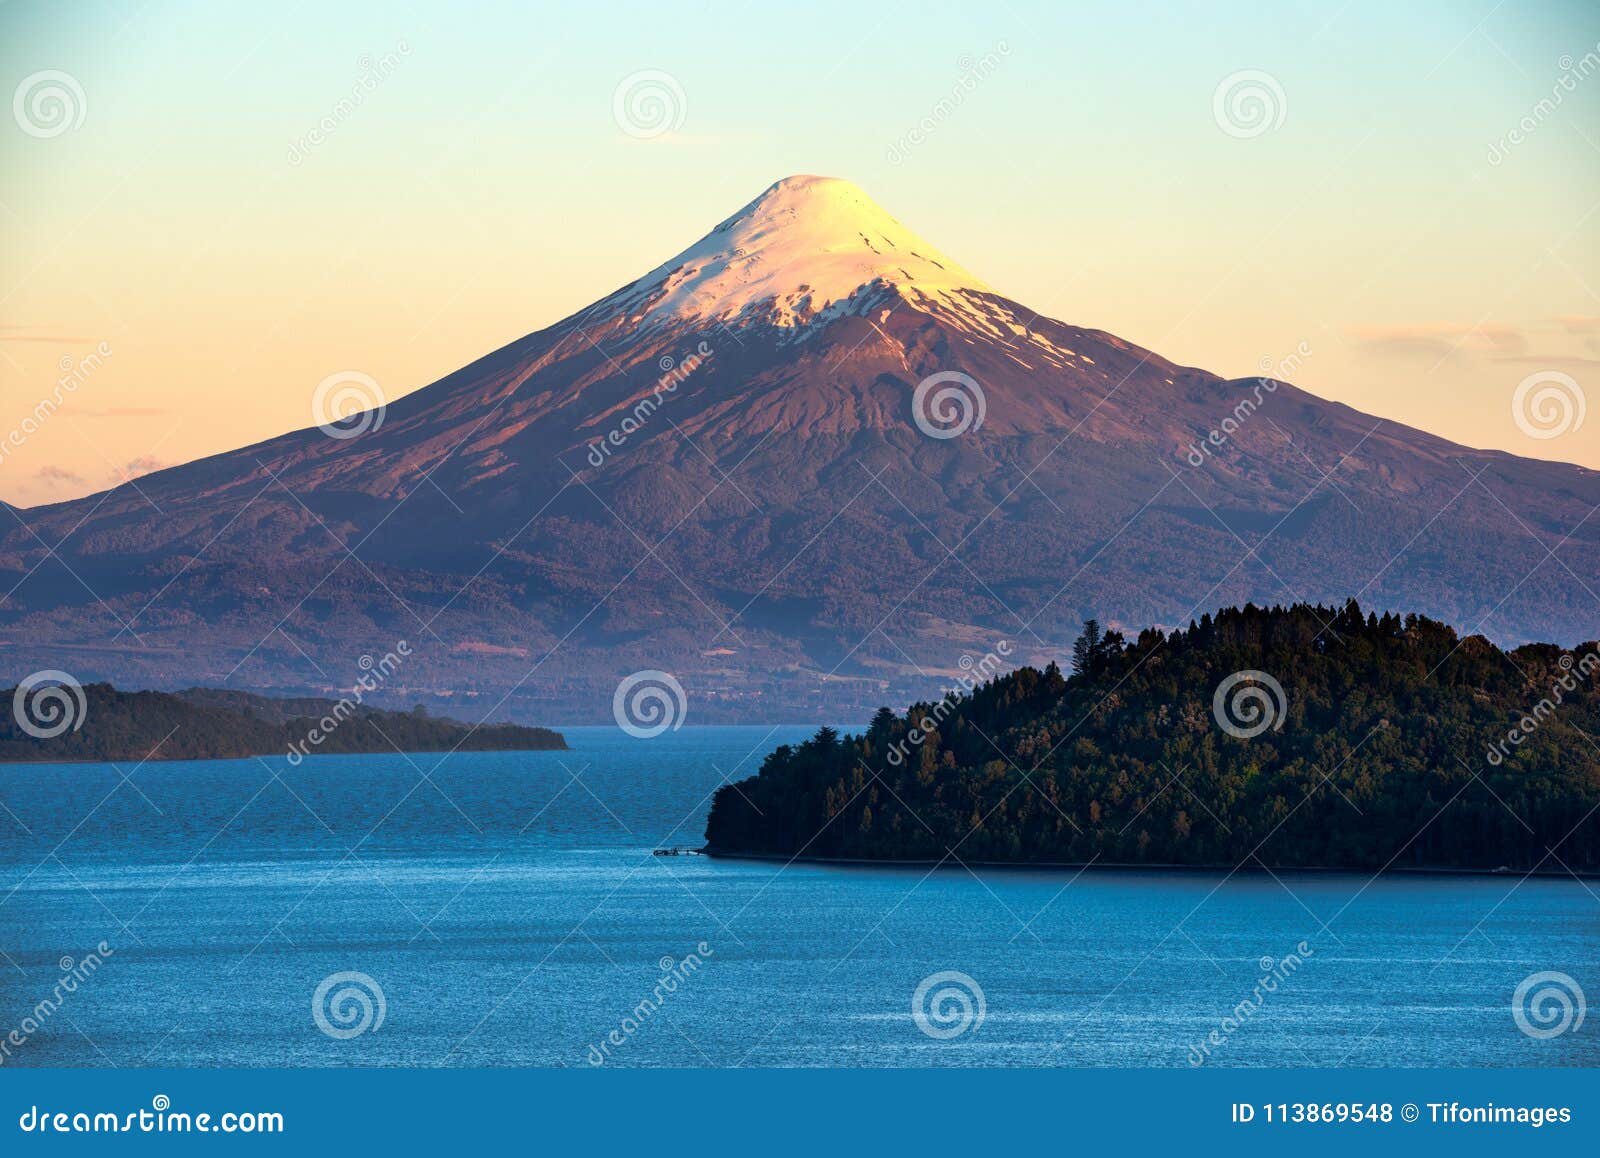 osorno volcano and lake llanquihue